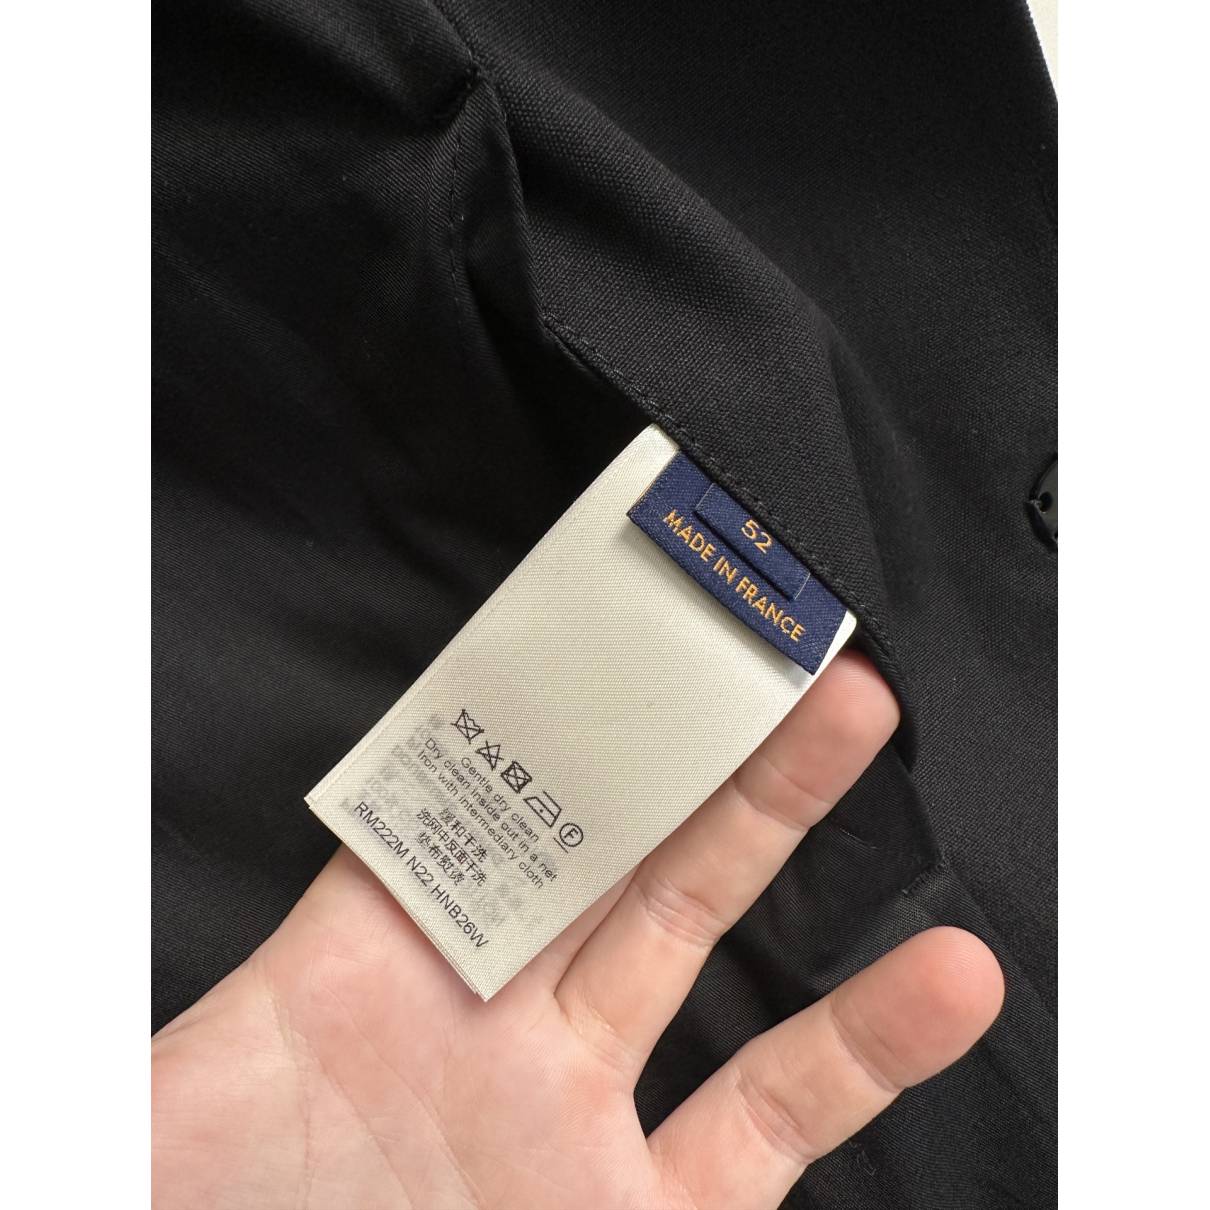 Jacket Louis Vuitton Purple size 52 IT in Cotton - 24991185